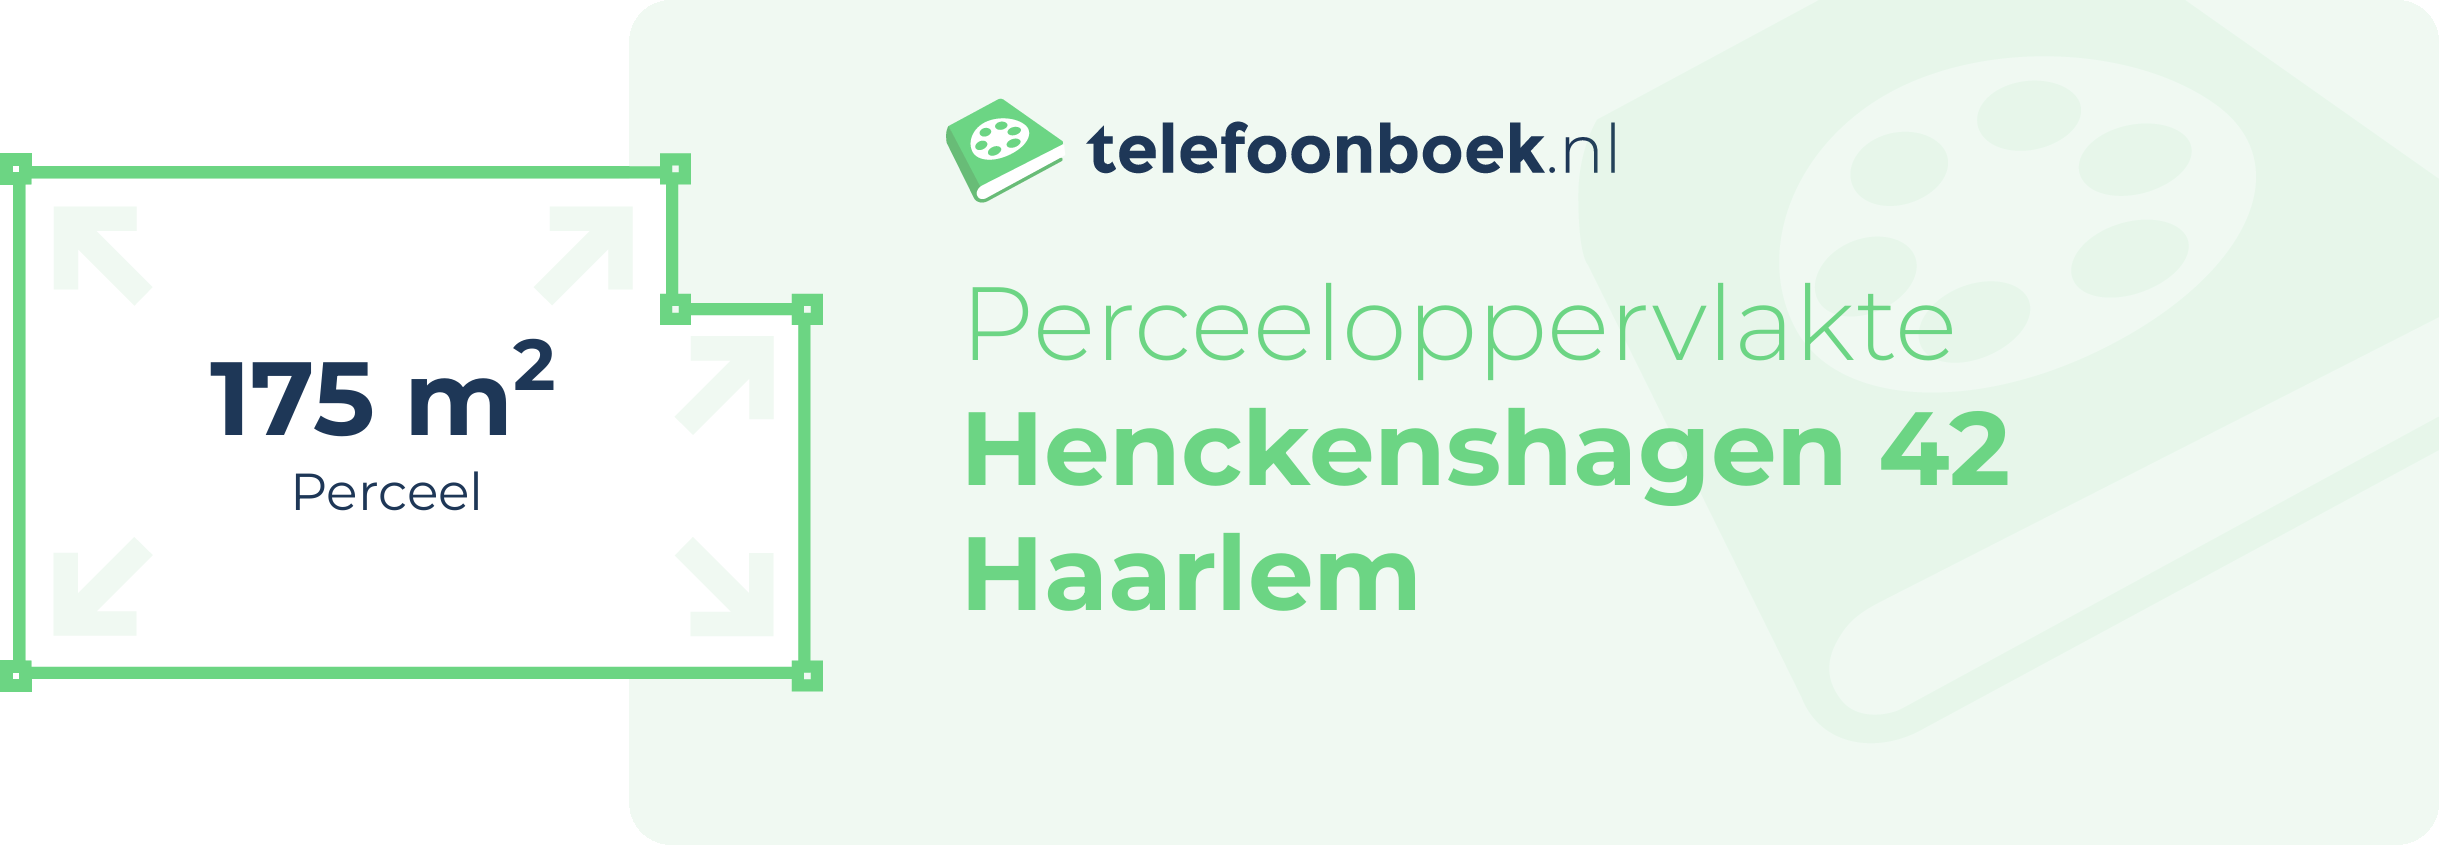 Perceeloppervlakte Henckenshagen 42 Haarlem